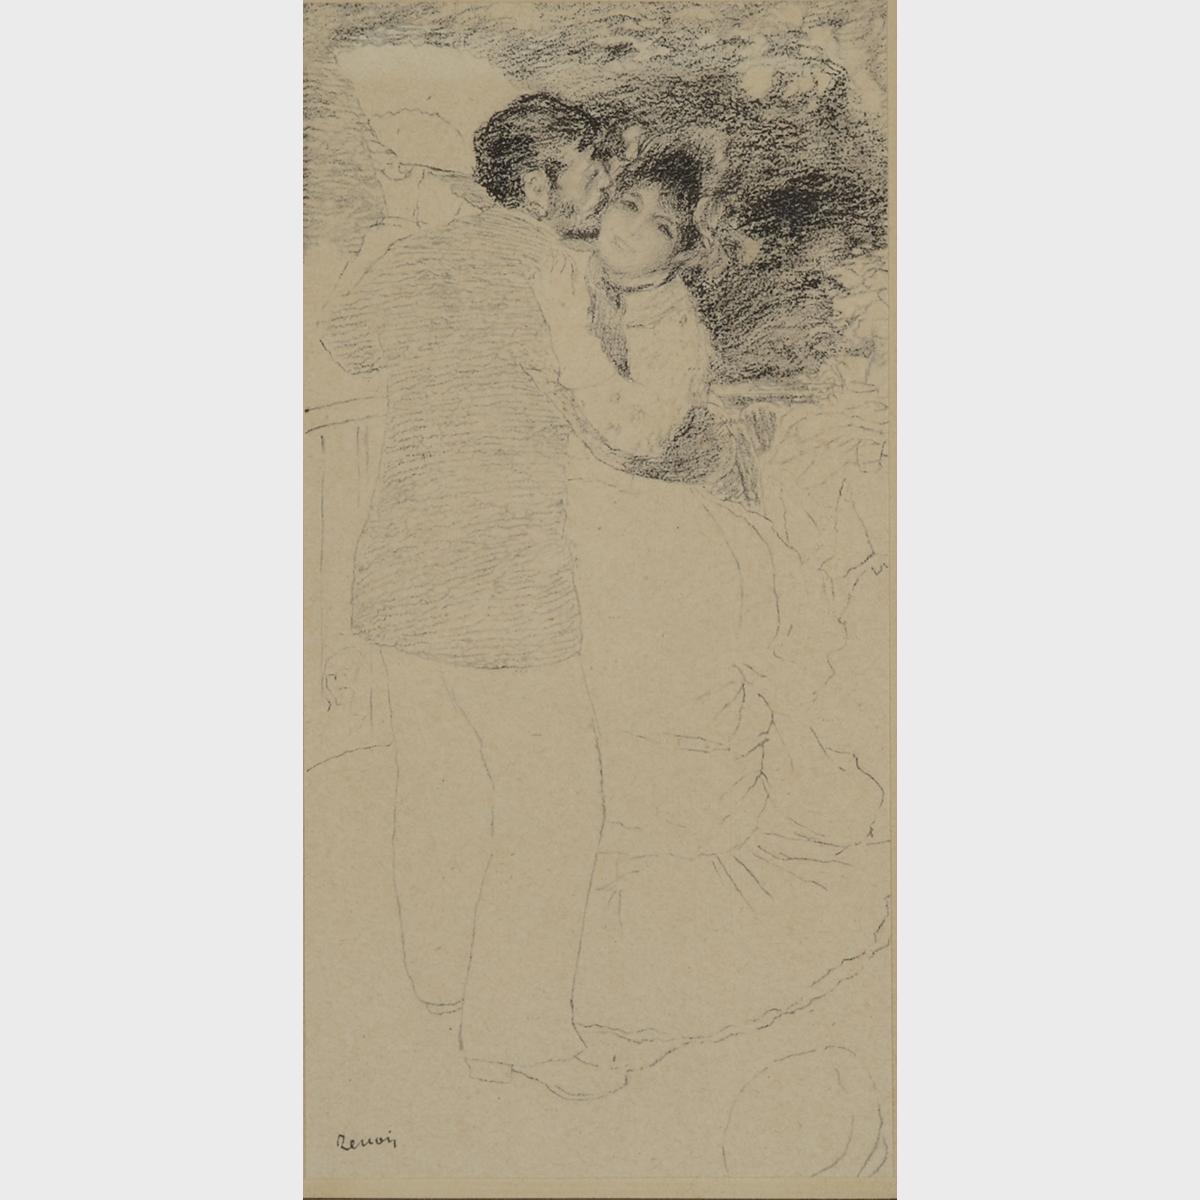 After Pierre-Auguste Renoir (1841-1919)